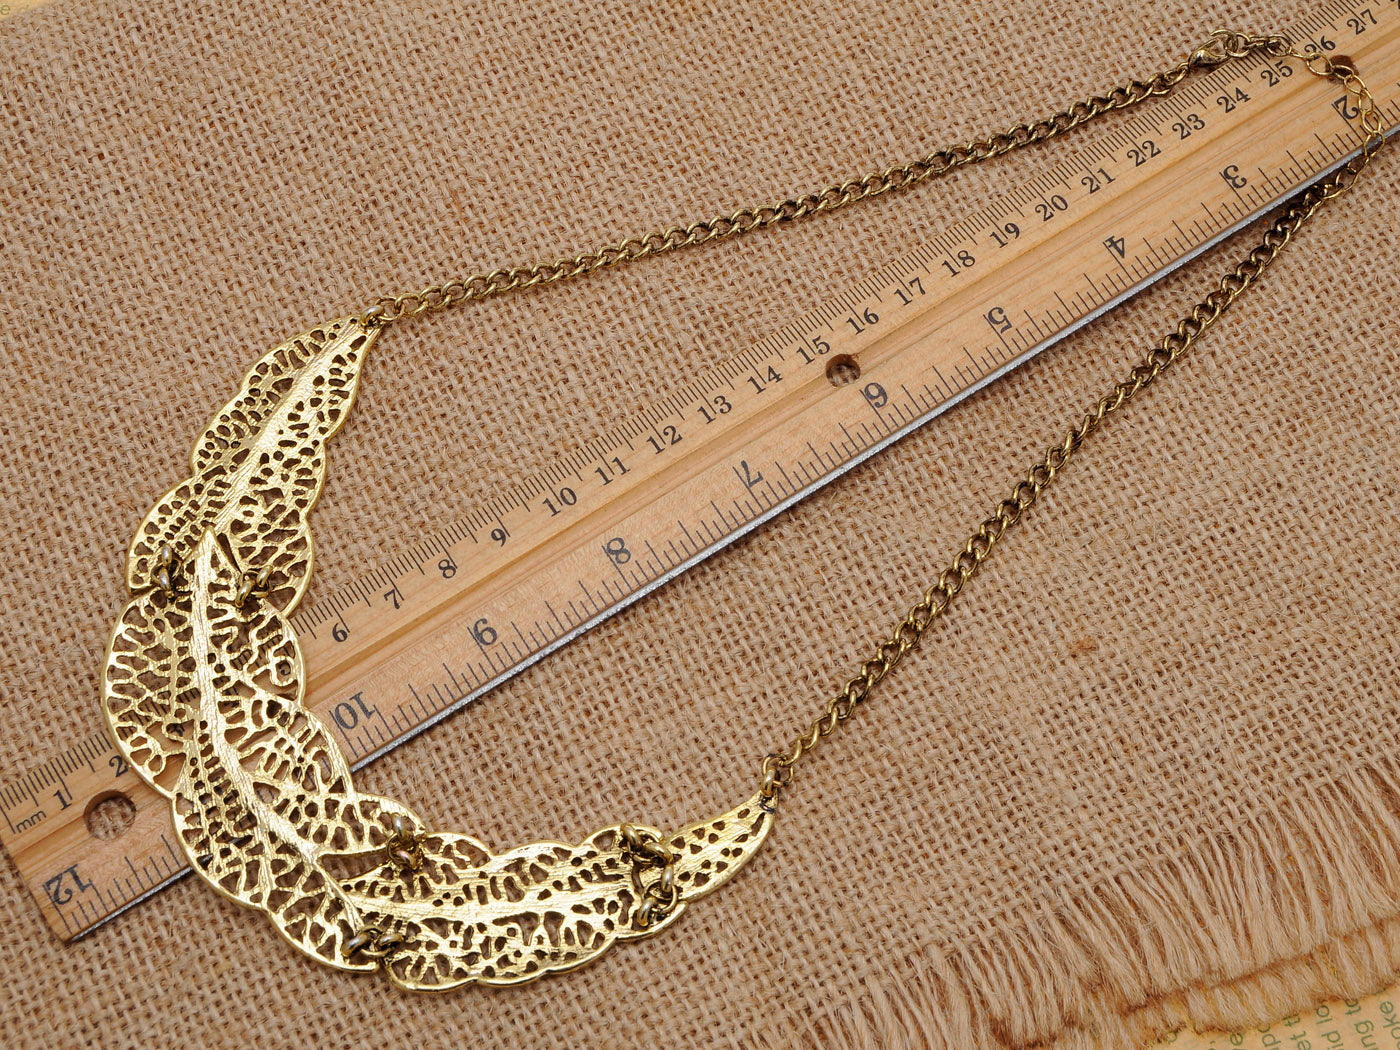 Ethnic Intricate Design Leaf Shaped Crescent Necklace